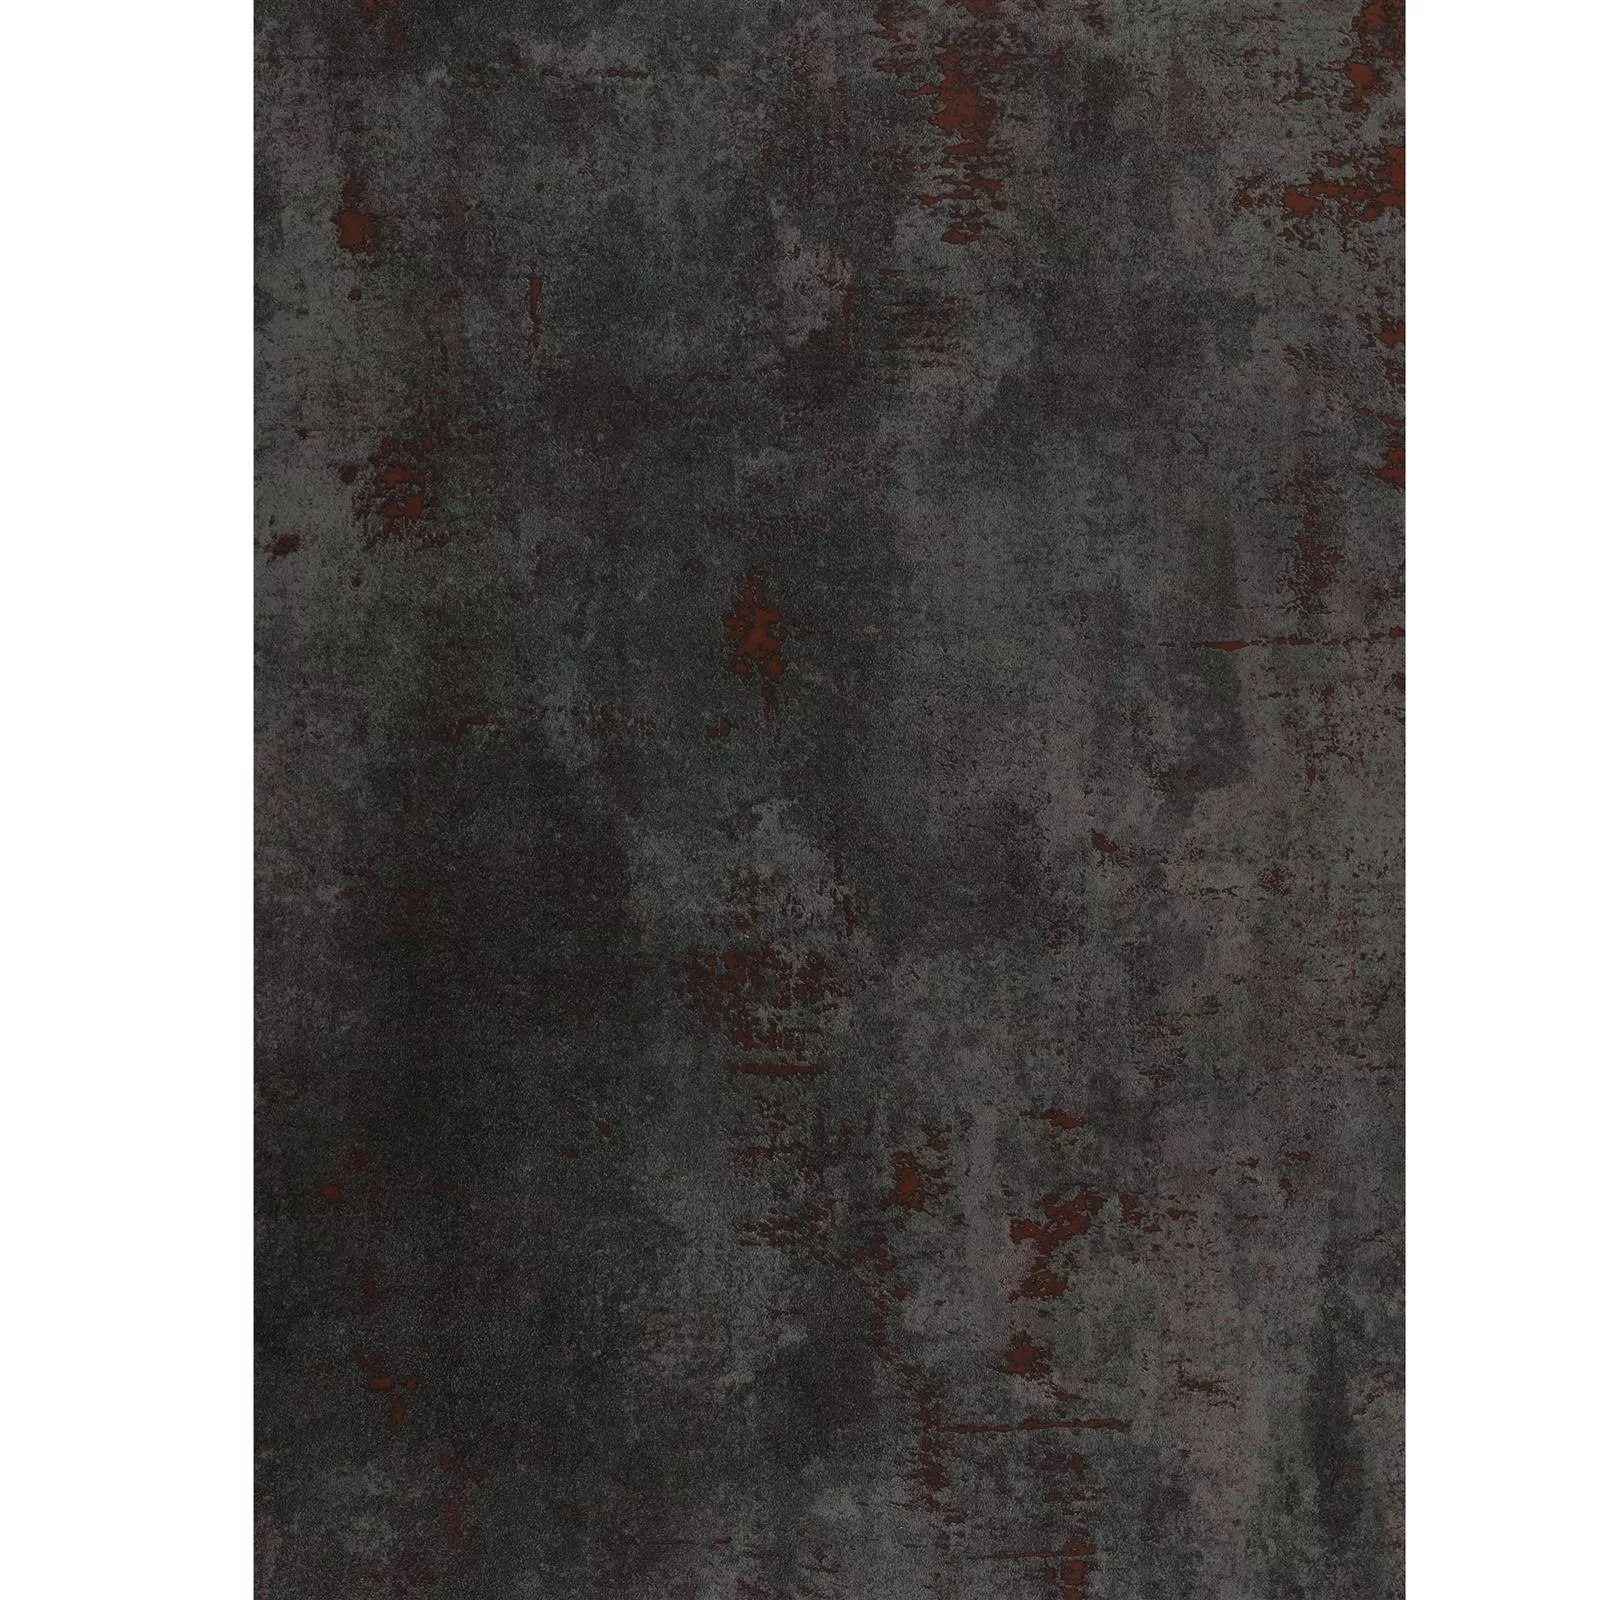 Gresie Phantom Aspect Metalic Lustruit Parțial Titanium 60x120cm